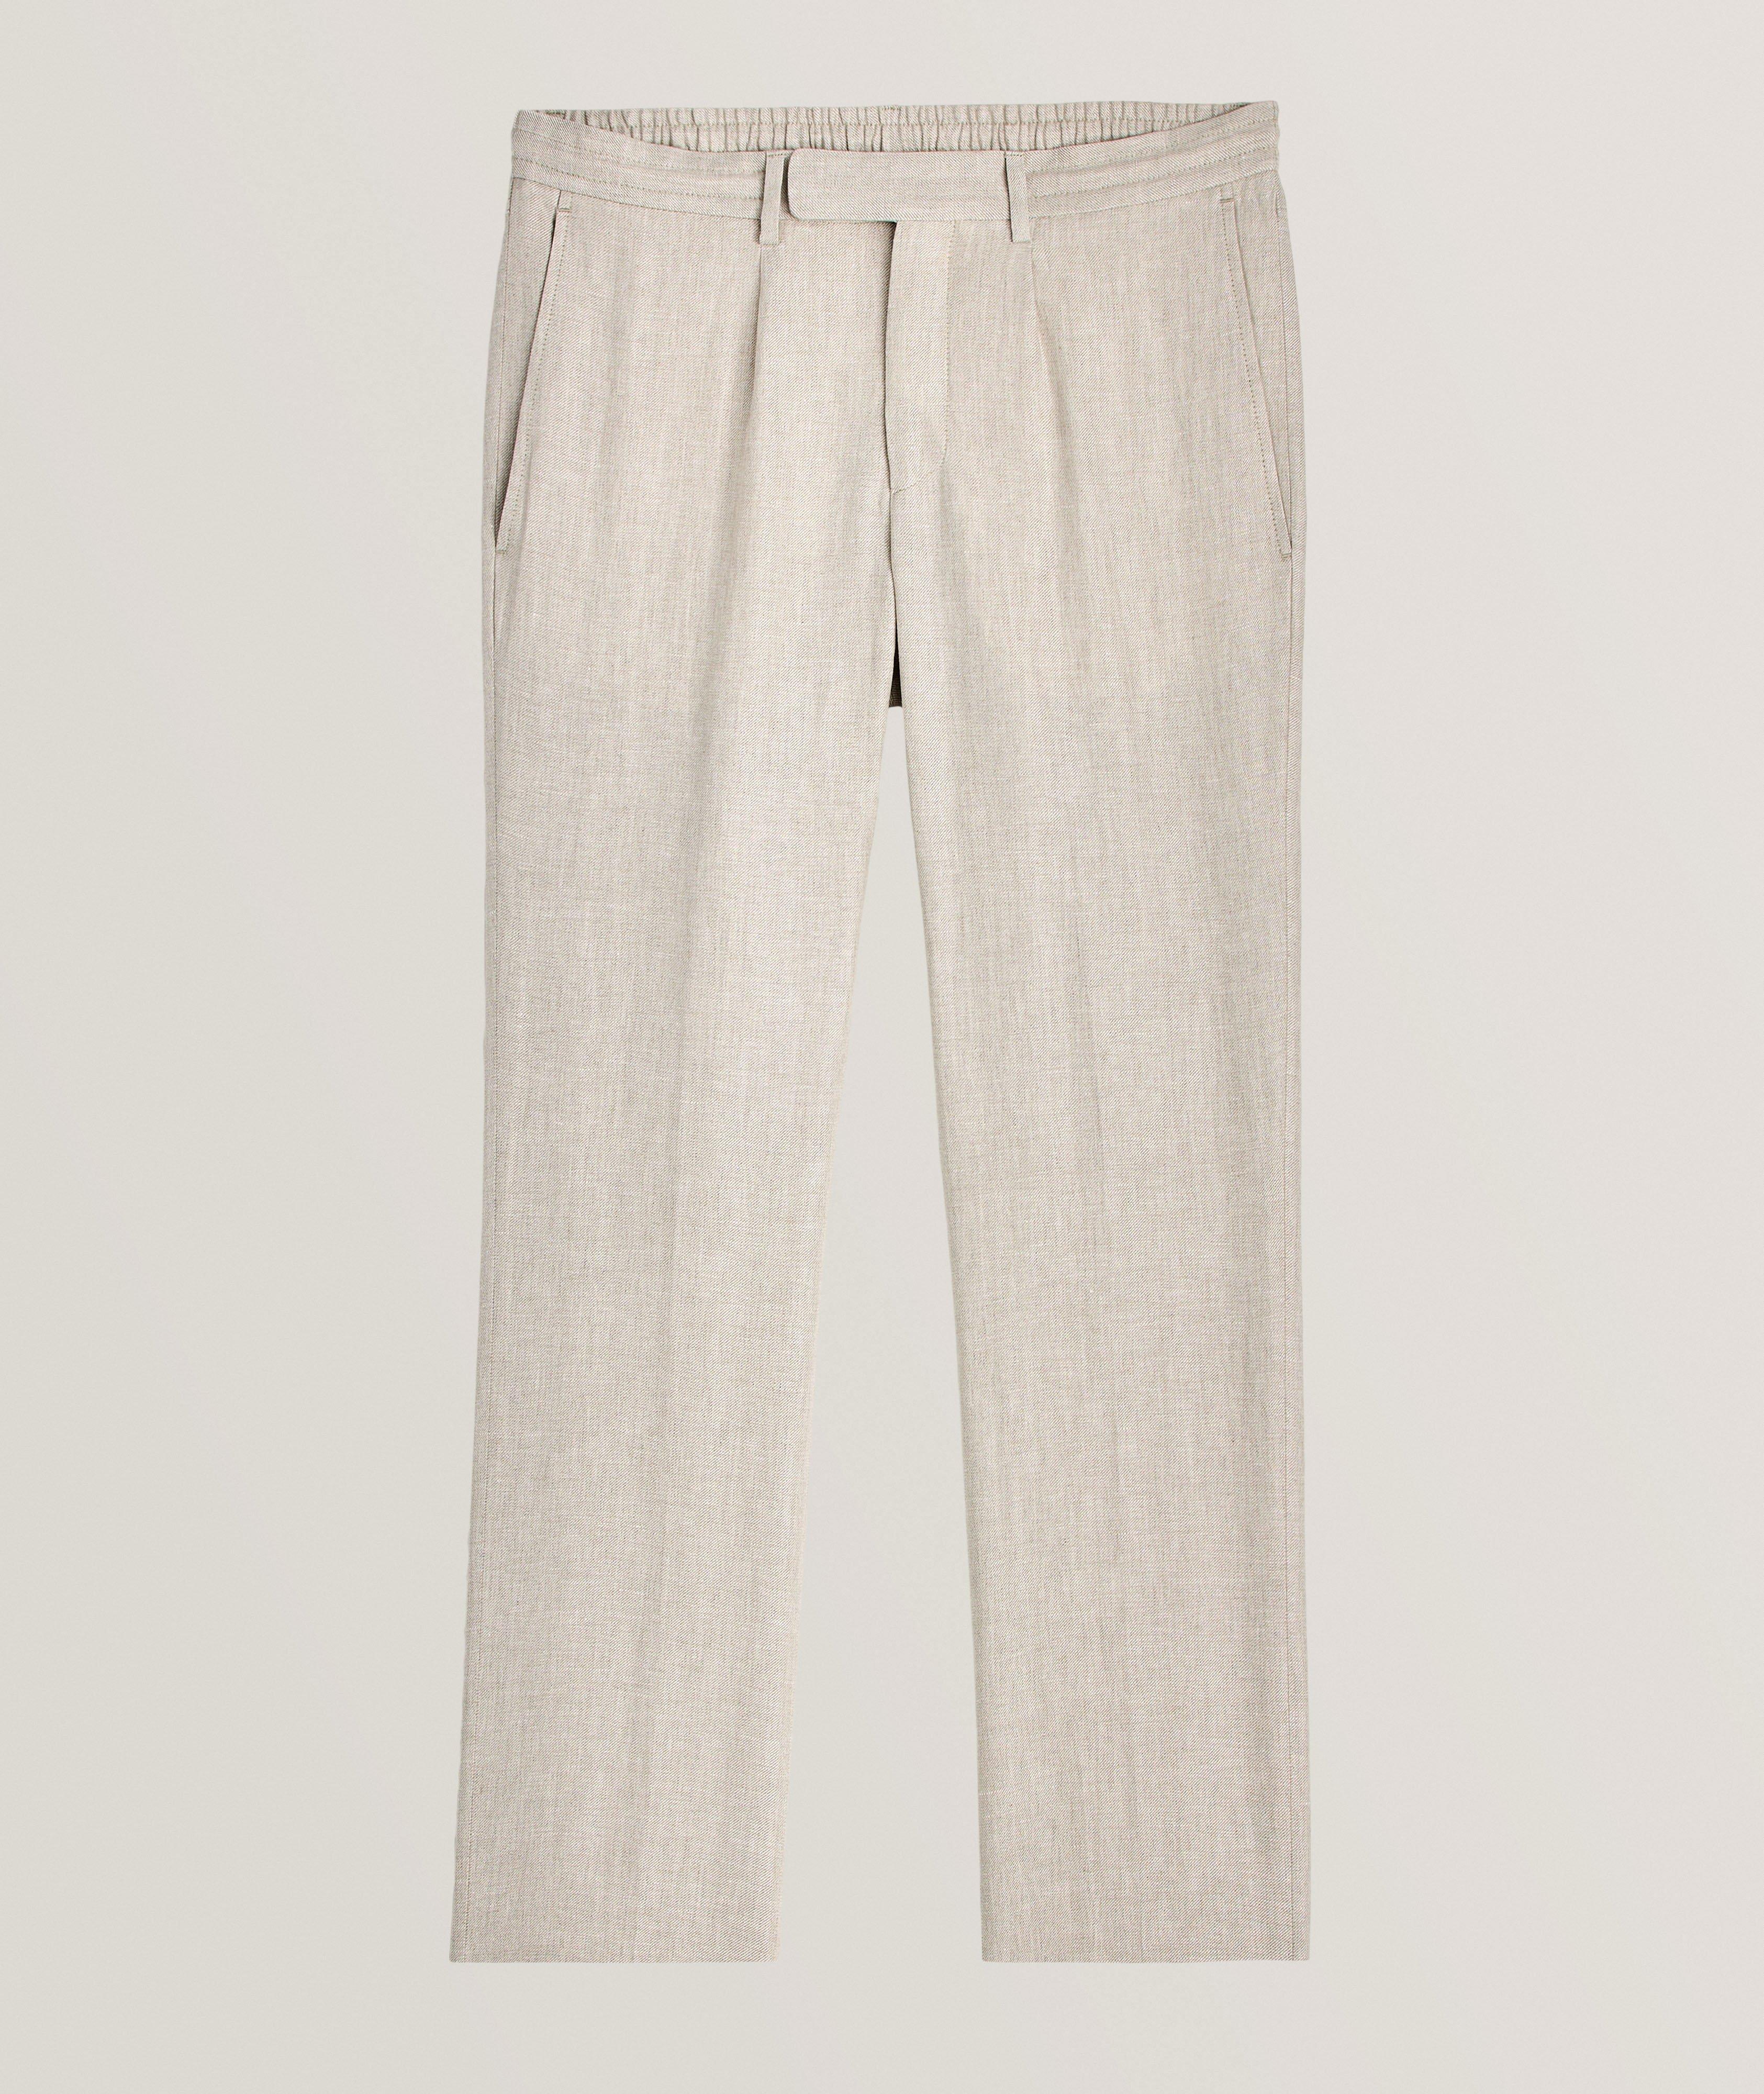 Drawstring Linen Pants image 0